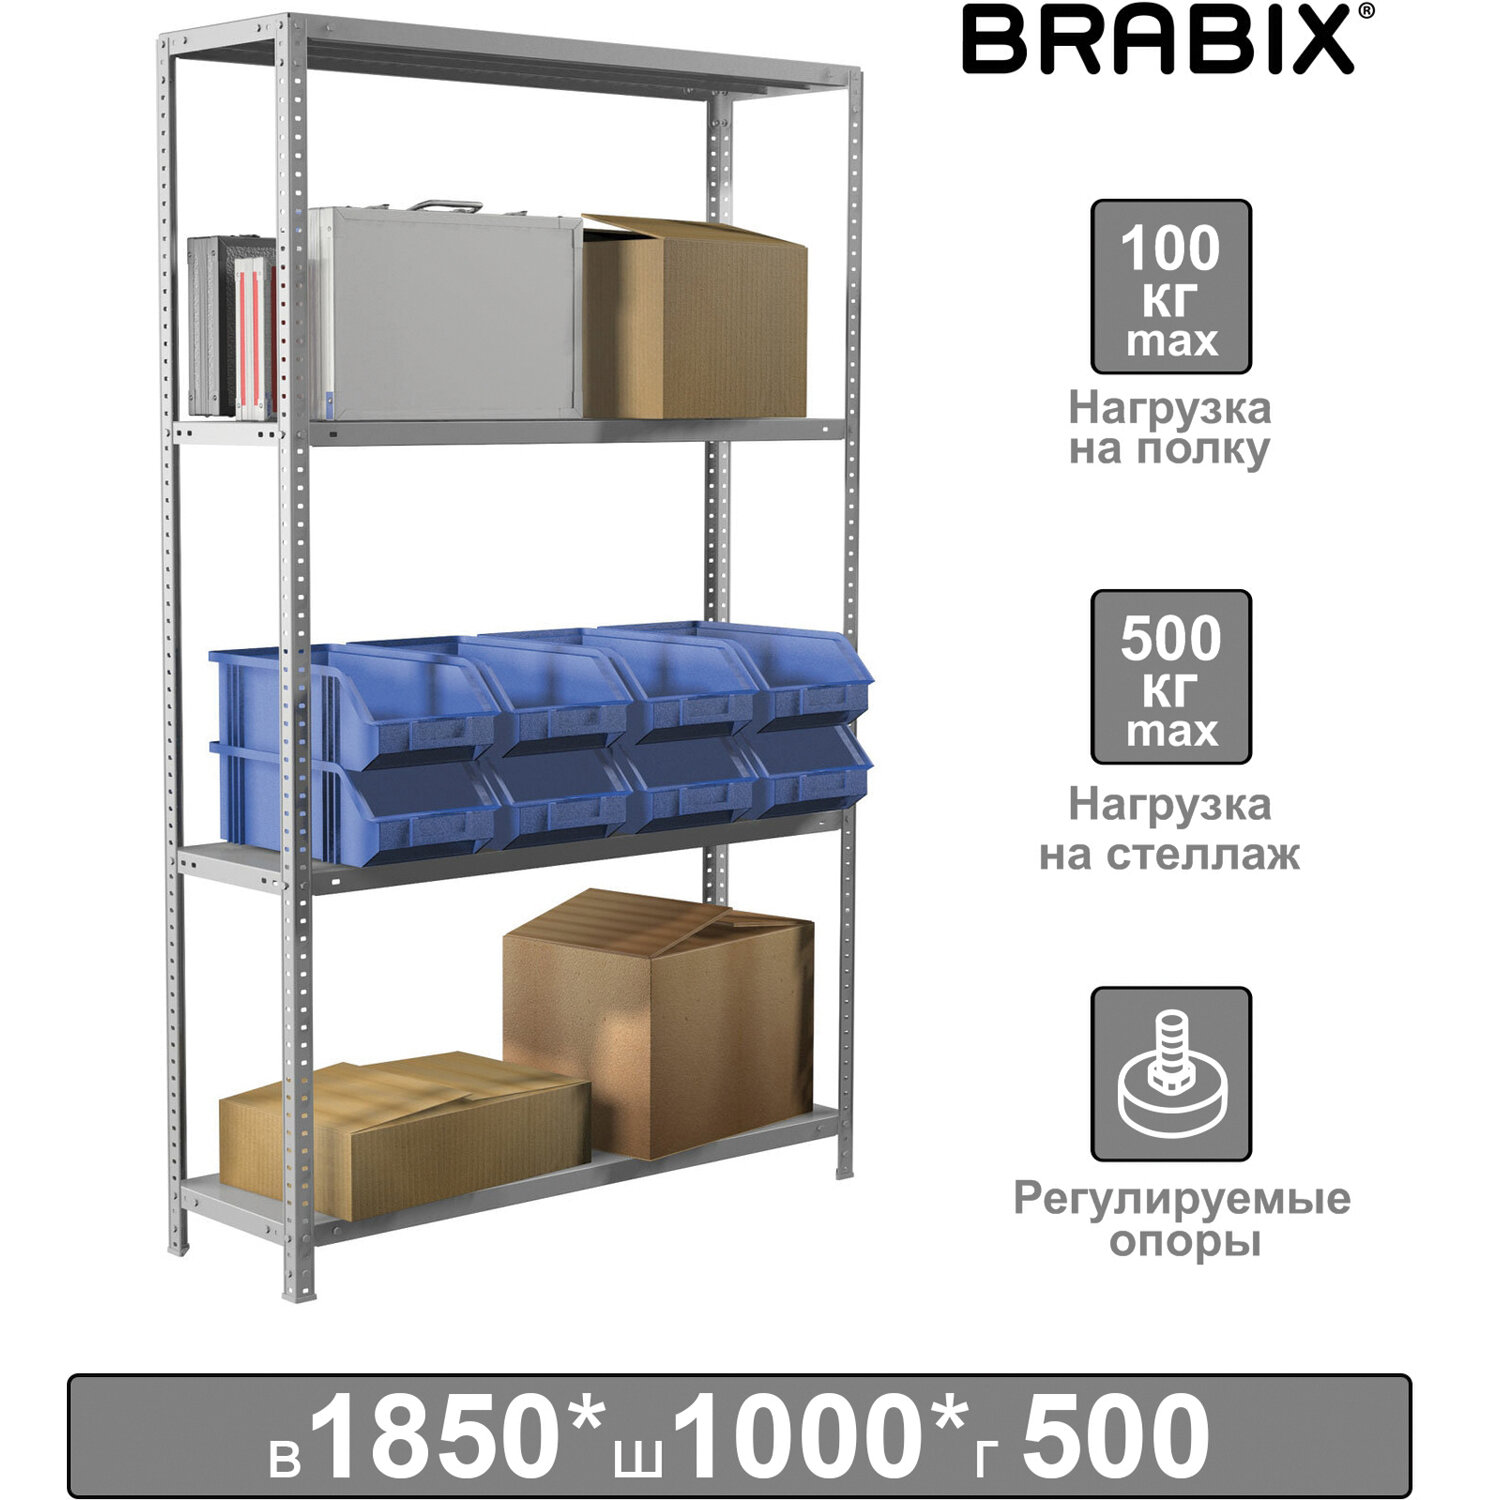 Brabix Стеллаж металлический BRABIX MS Plus-185/50-4, 1850х1000х500 мм, 4 полки, регулируемые опоры, 291106, S241BR155402